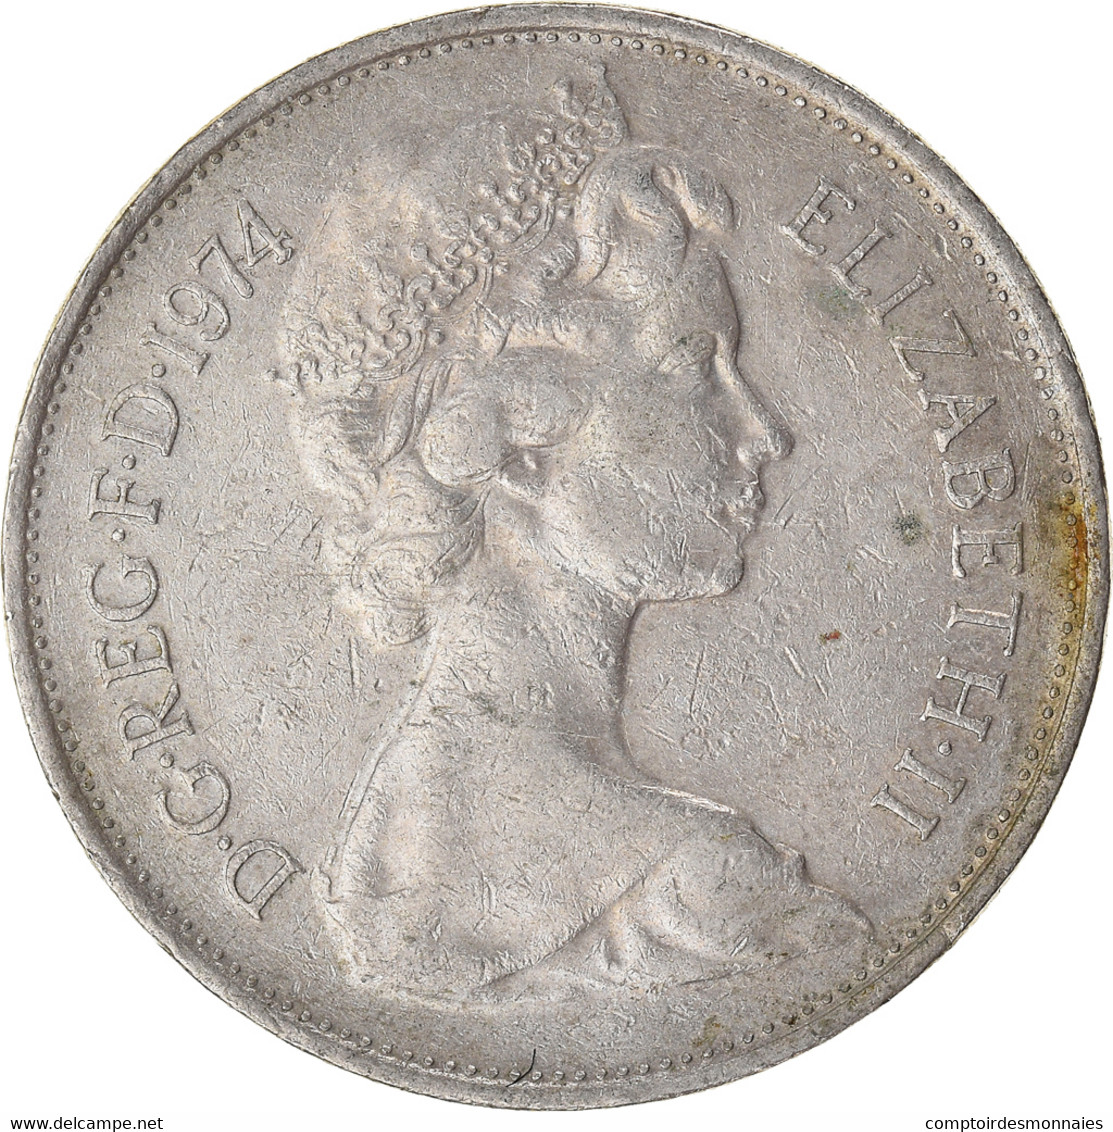 Monnaie, Grande-Bretagne, 10 New Pence, 1974 - 10 Pence & 10 New Pence